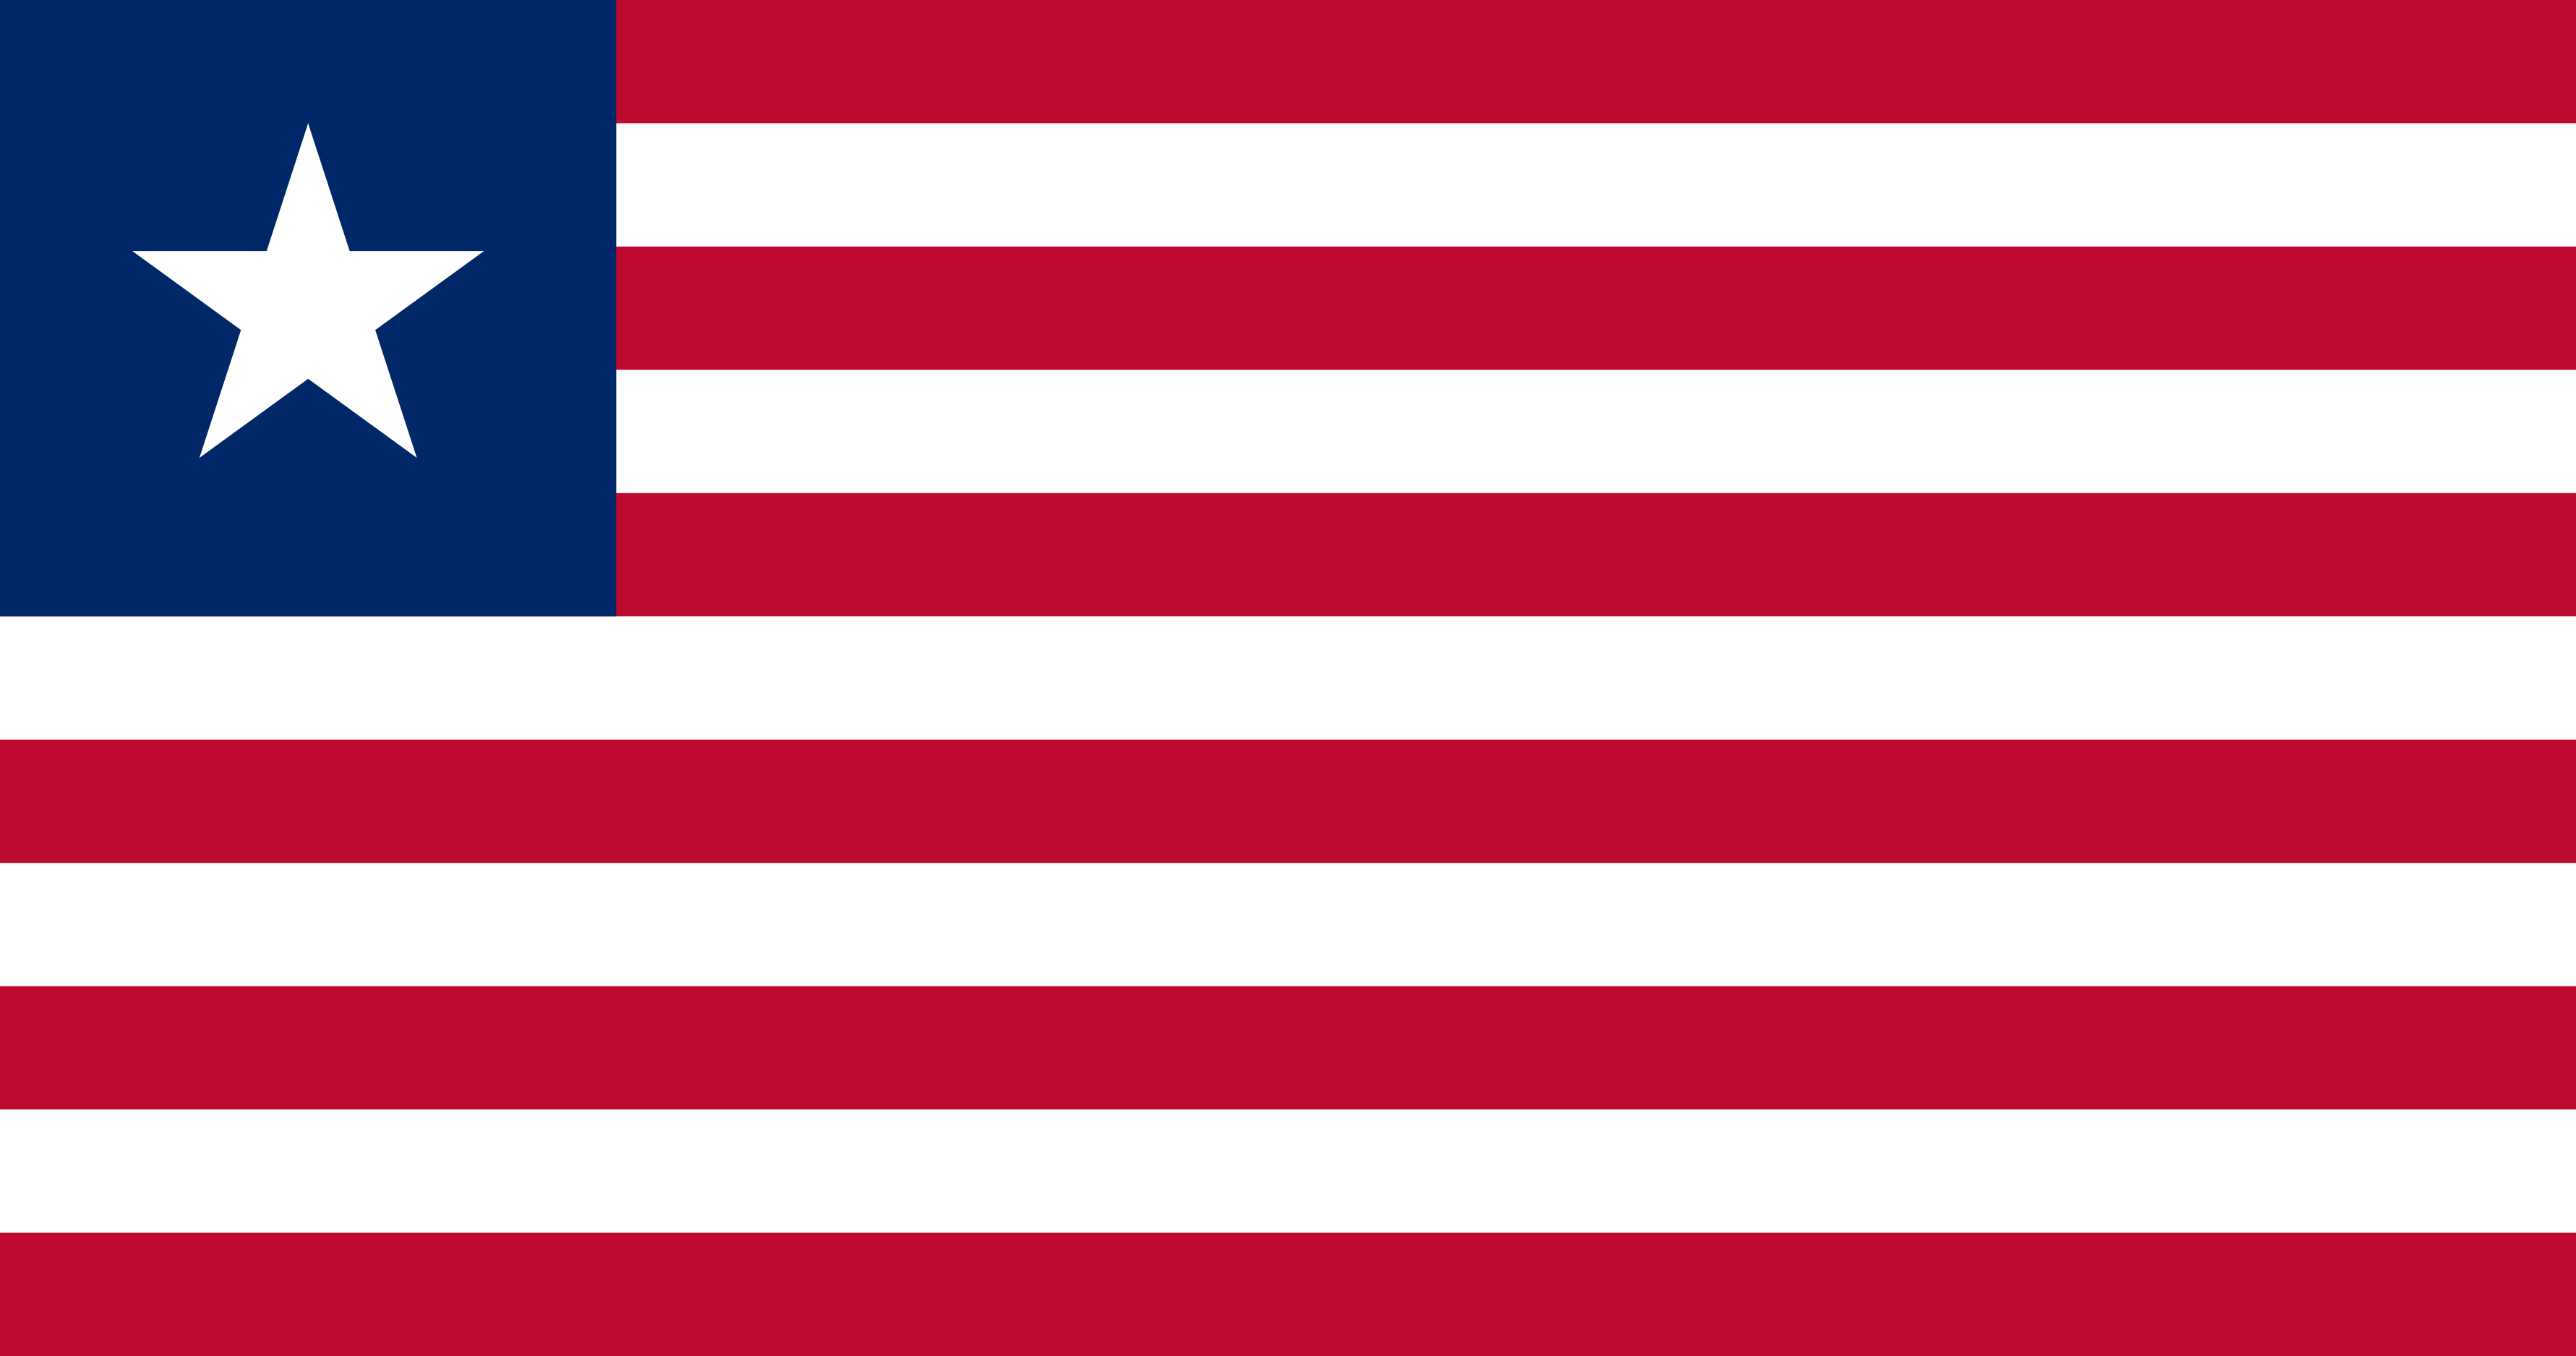 Liberia Flag Image - Free Download